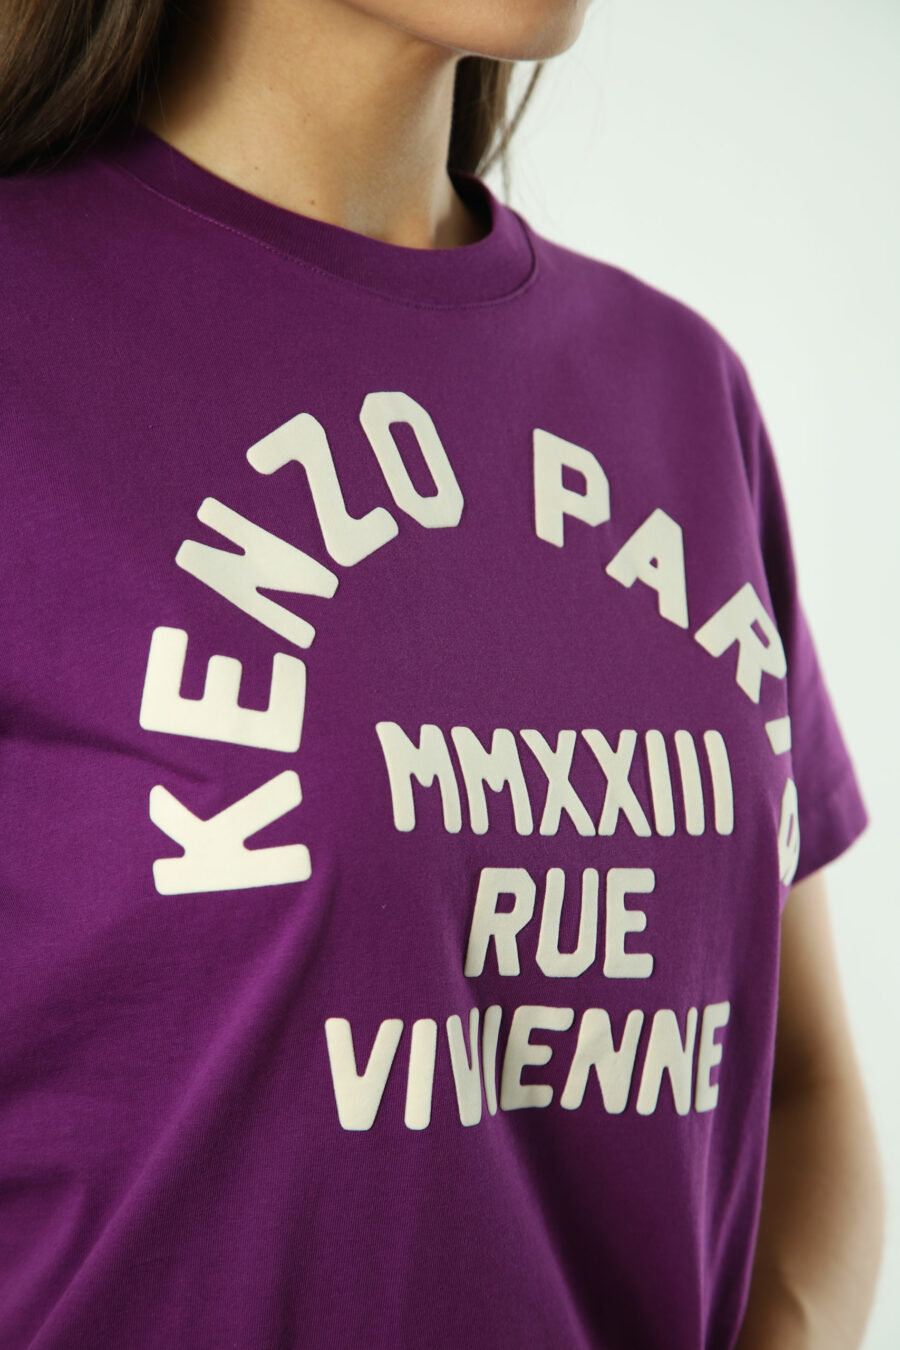 Camiseta violeta con maxilogo "rue vivienne" blanco - Photos 1356